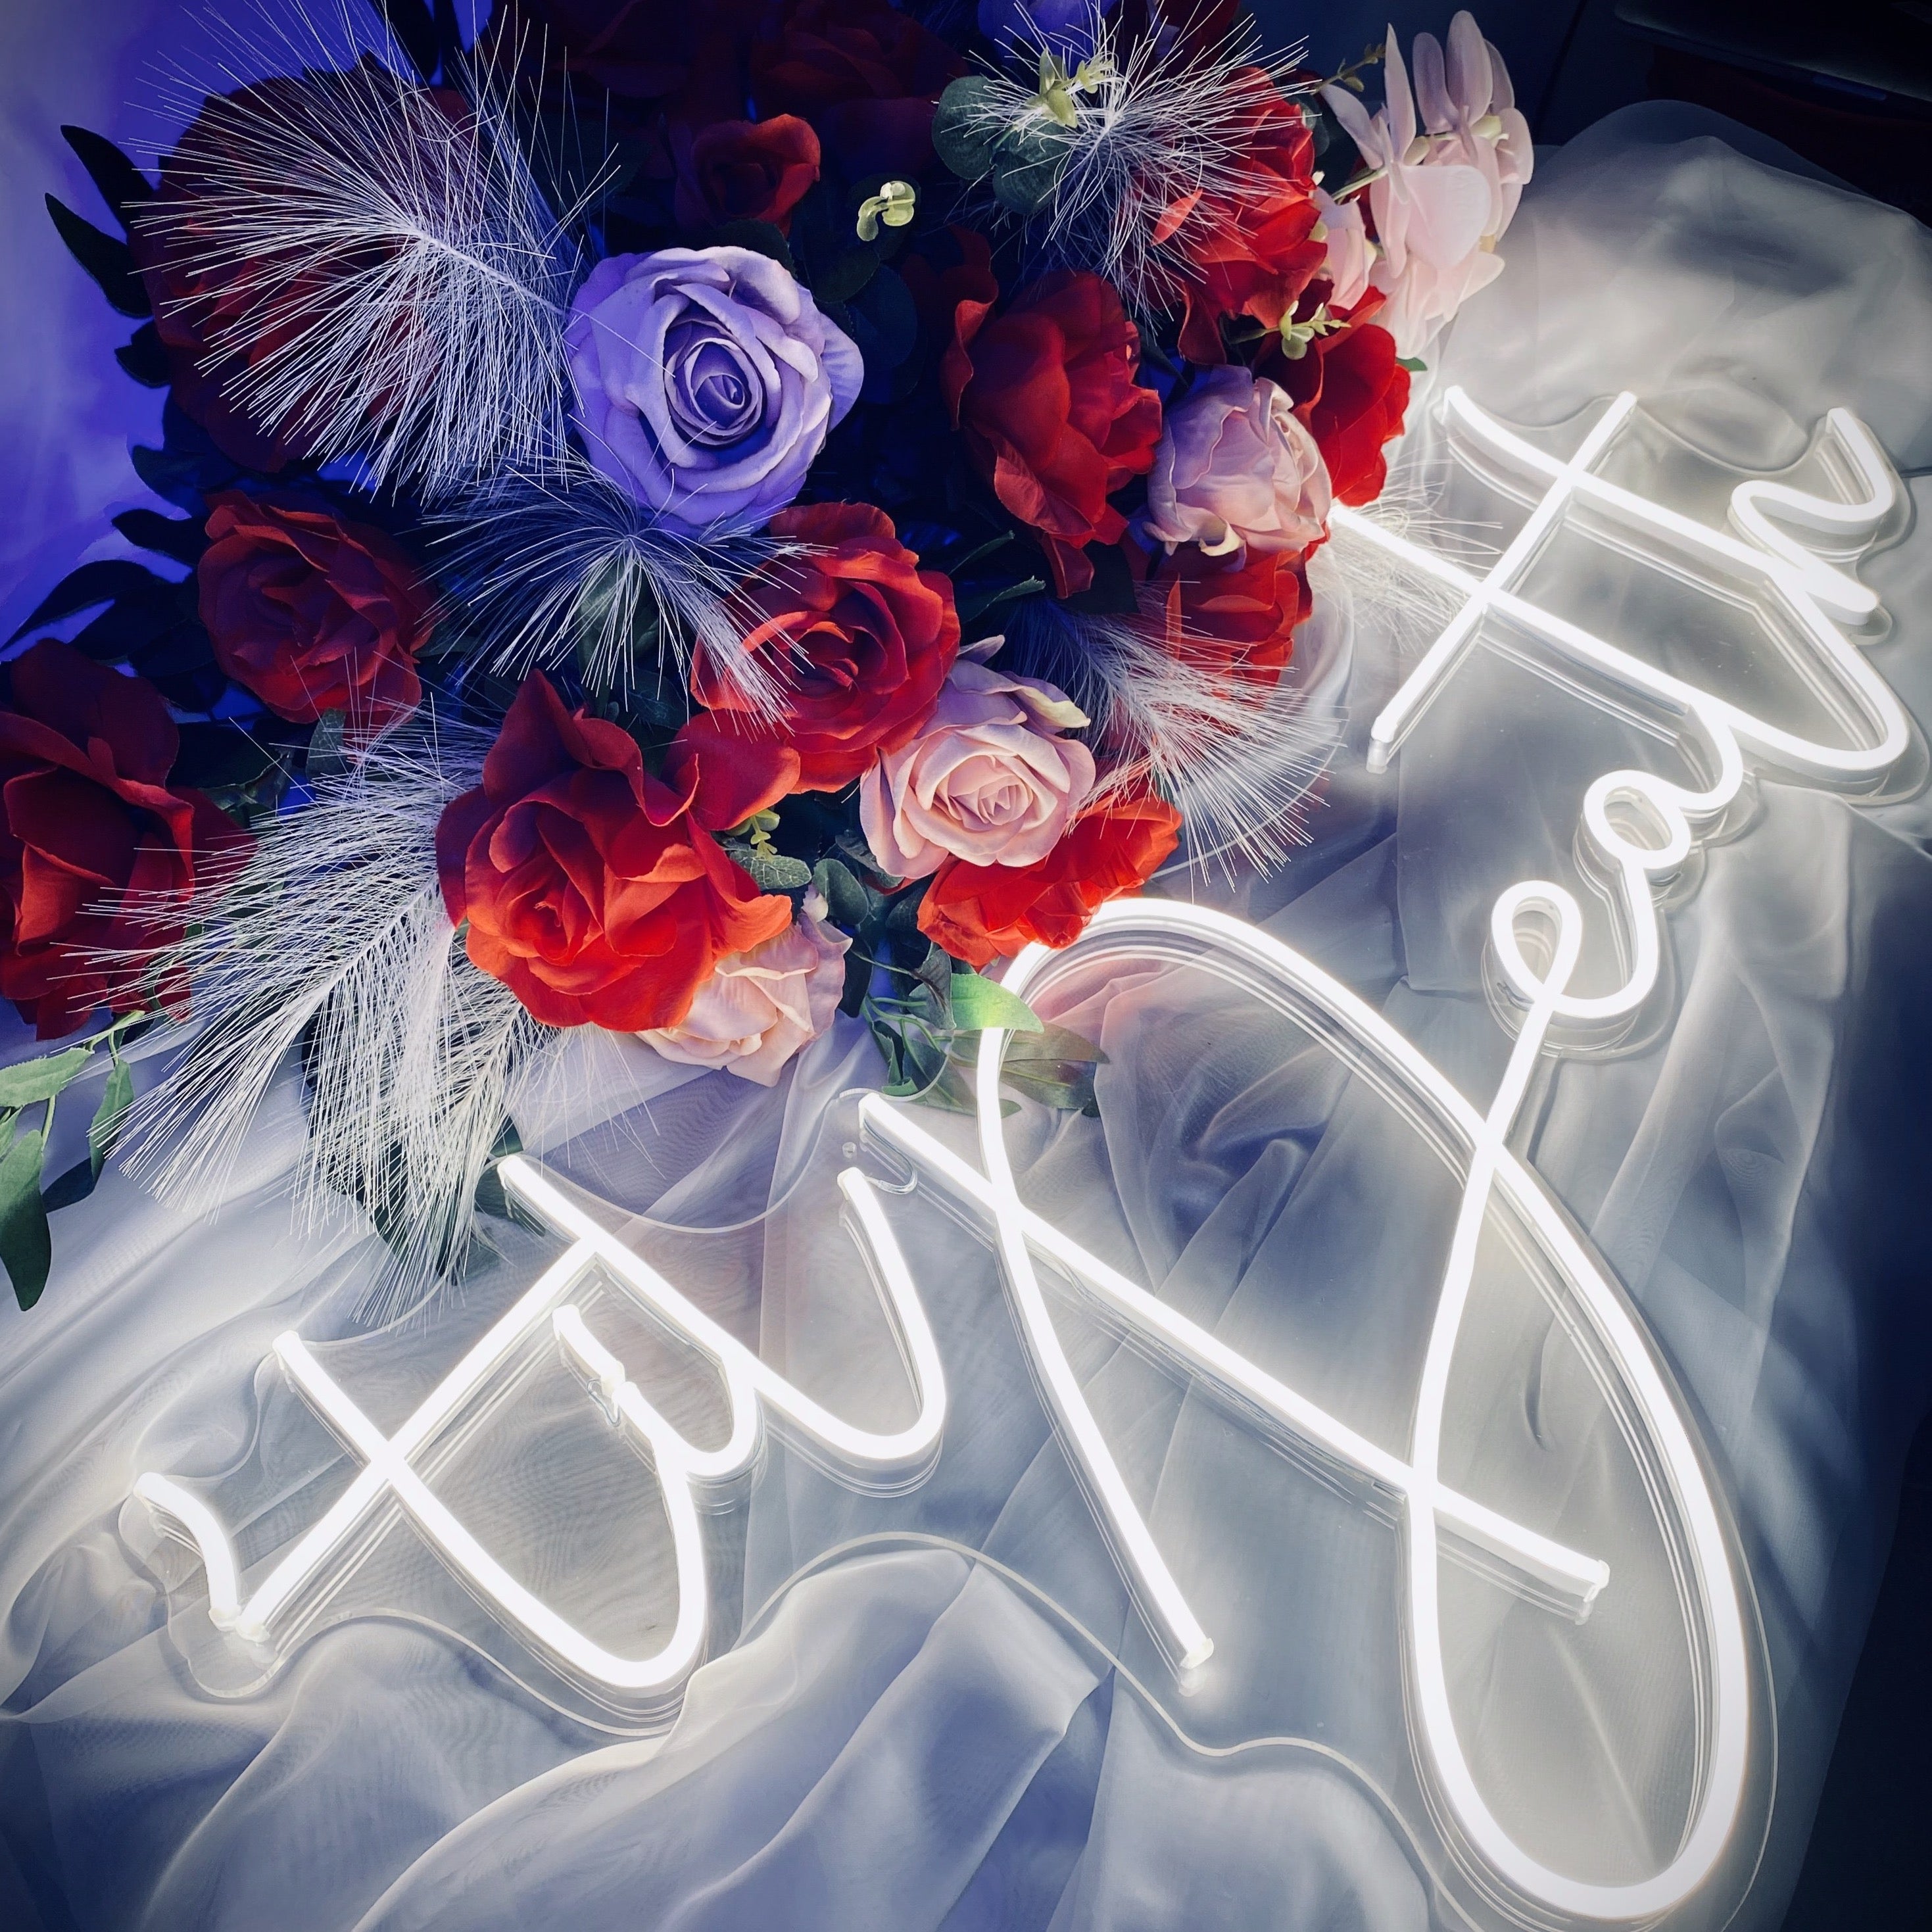 Til' Death - Custom LED Neon-Style Wedding Sign